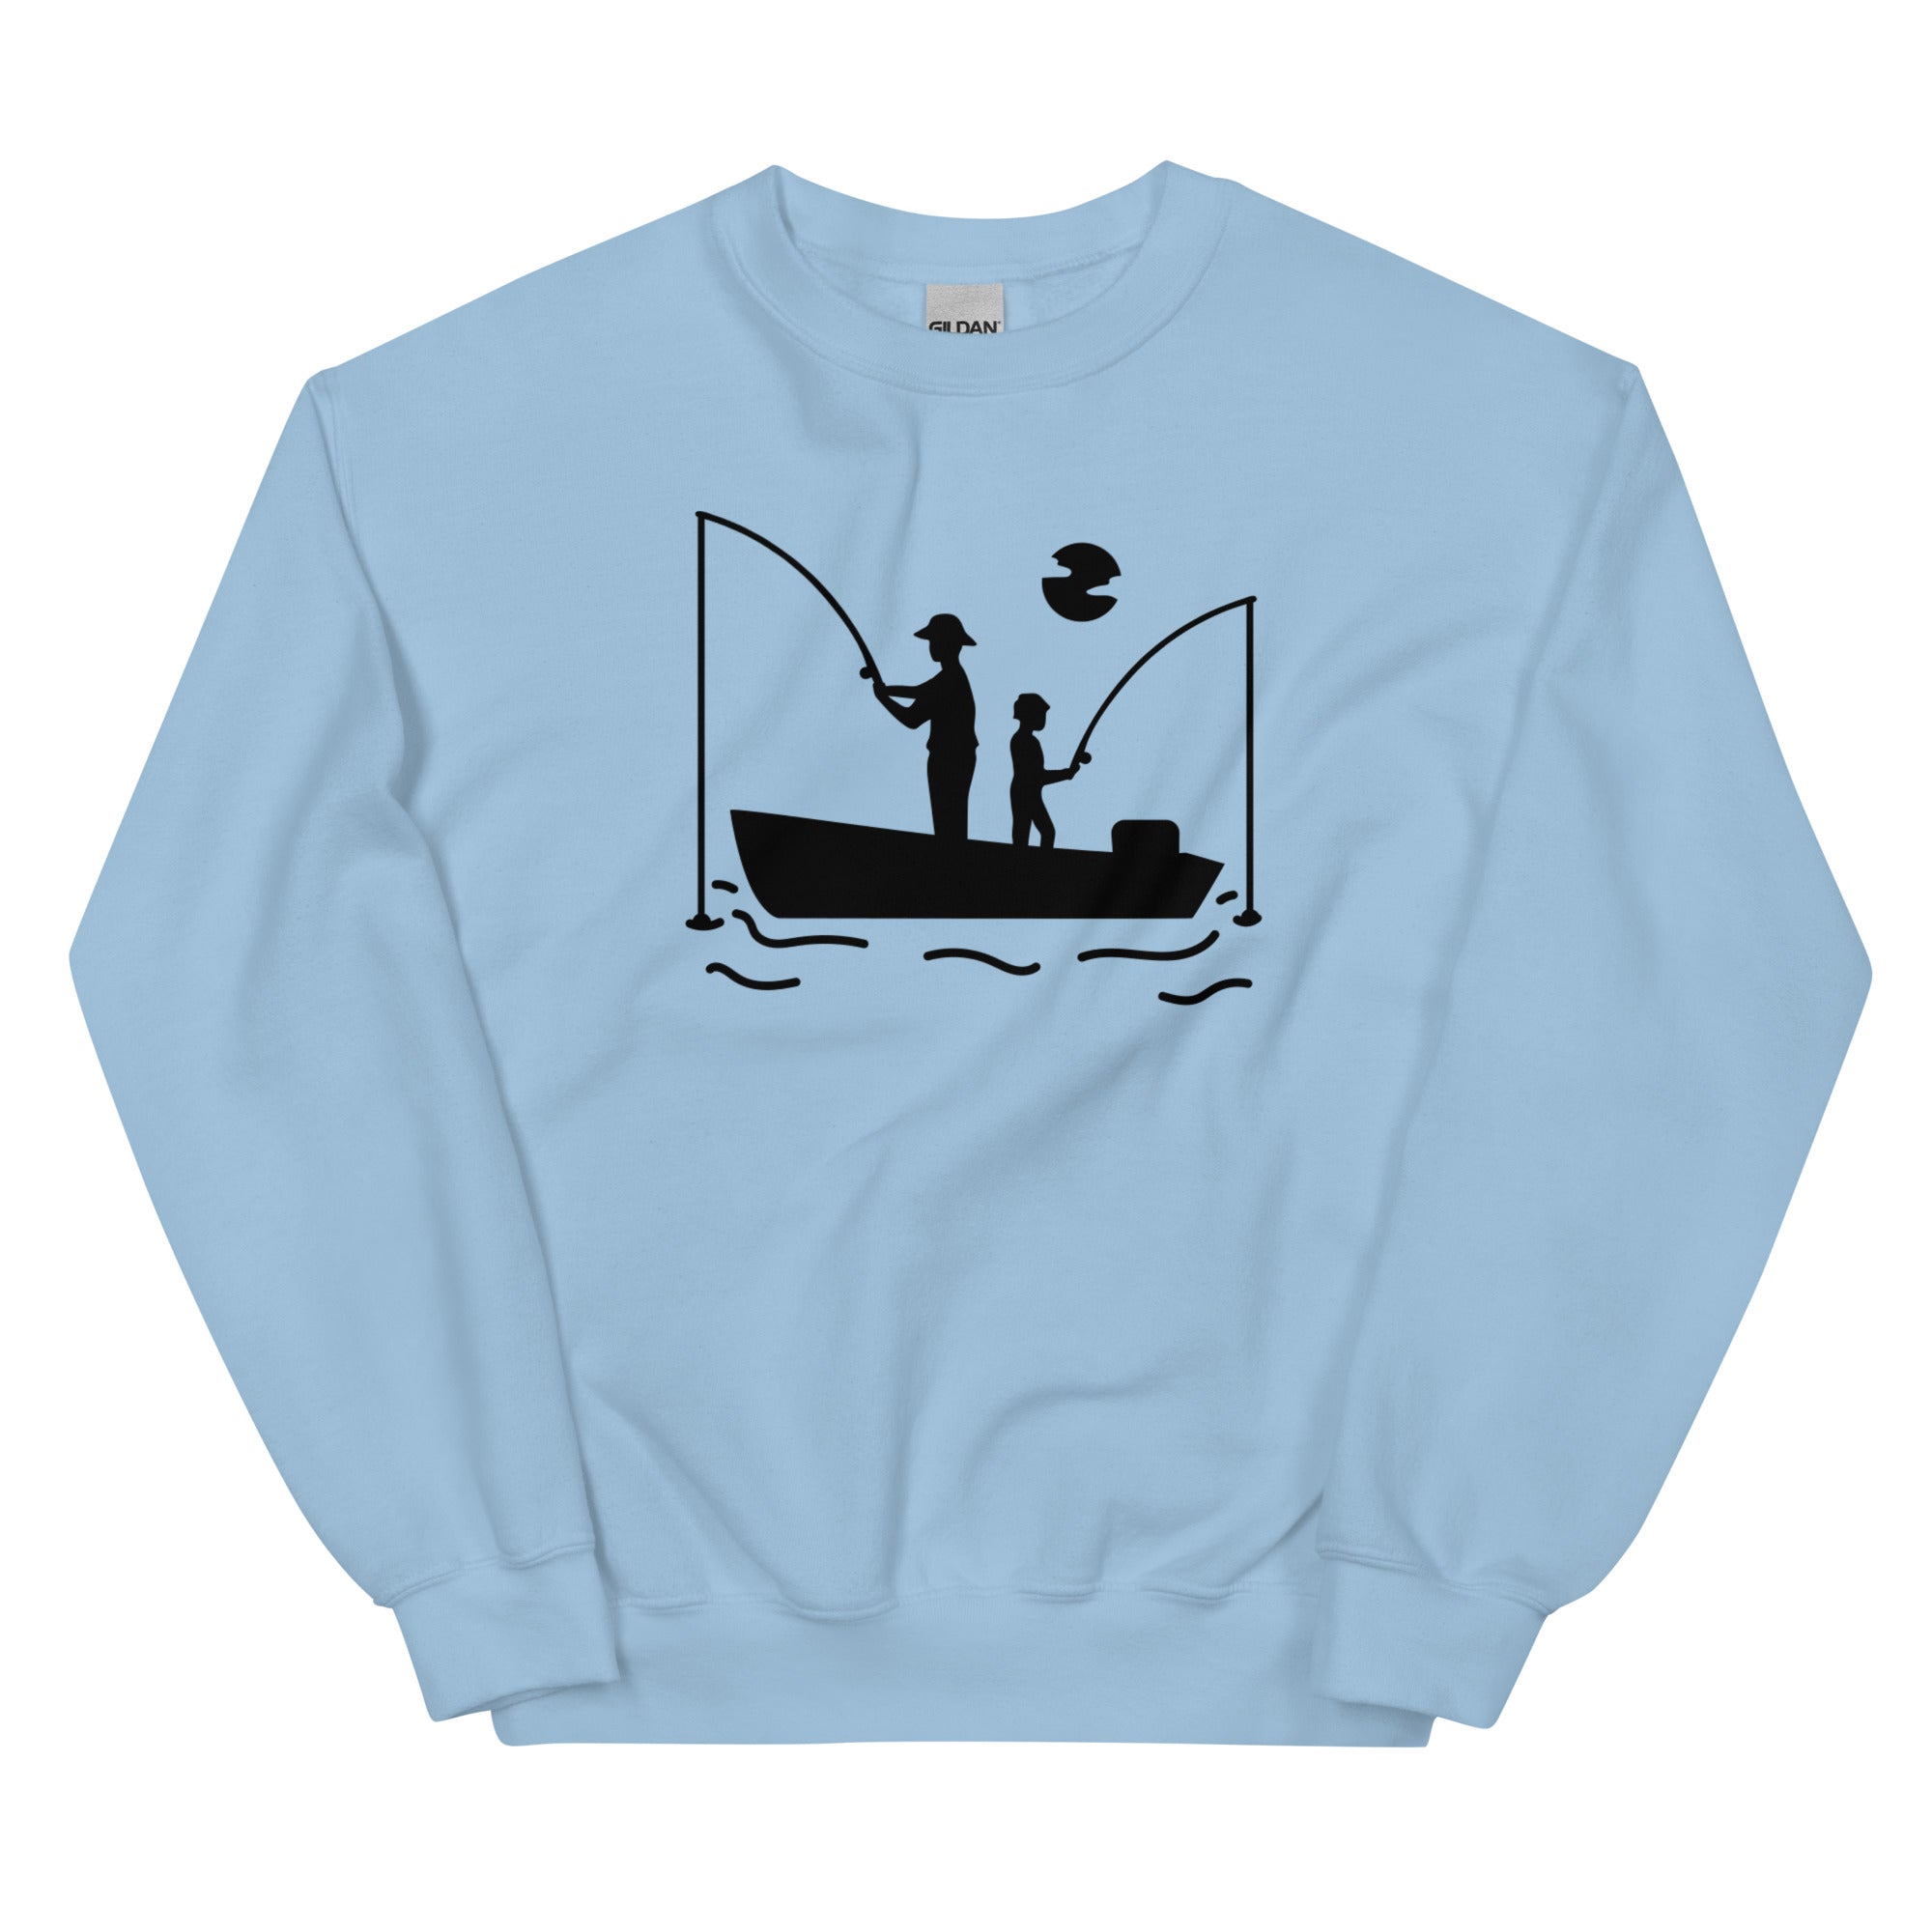 Let's Go Fishing! Do Great Things Fishing - Unisex Sweatshirt